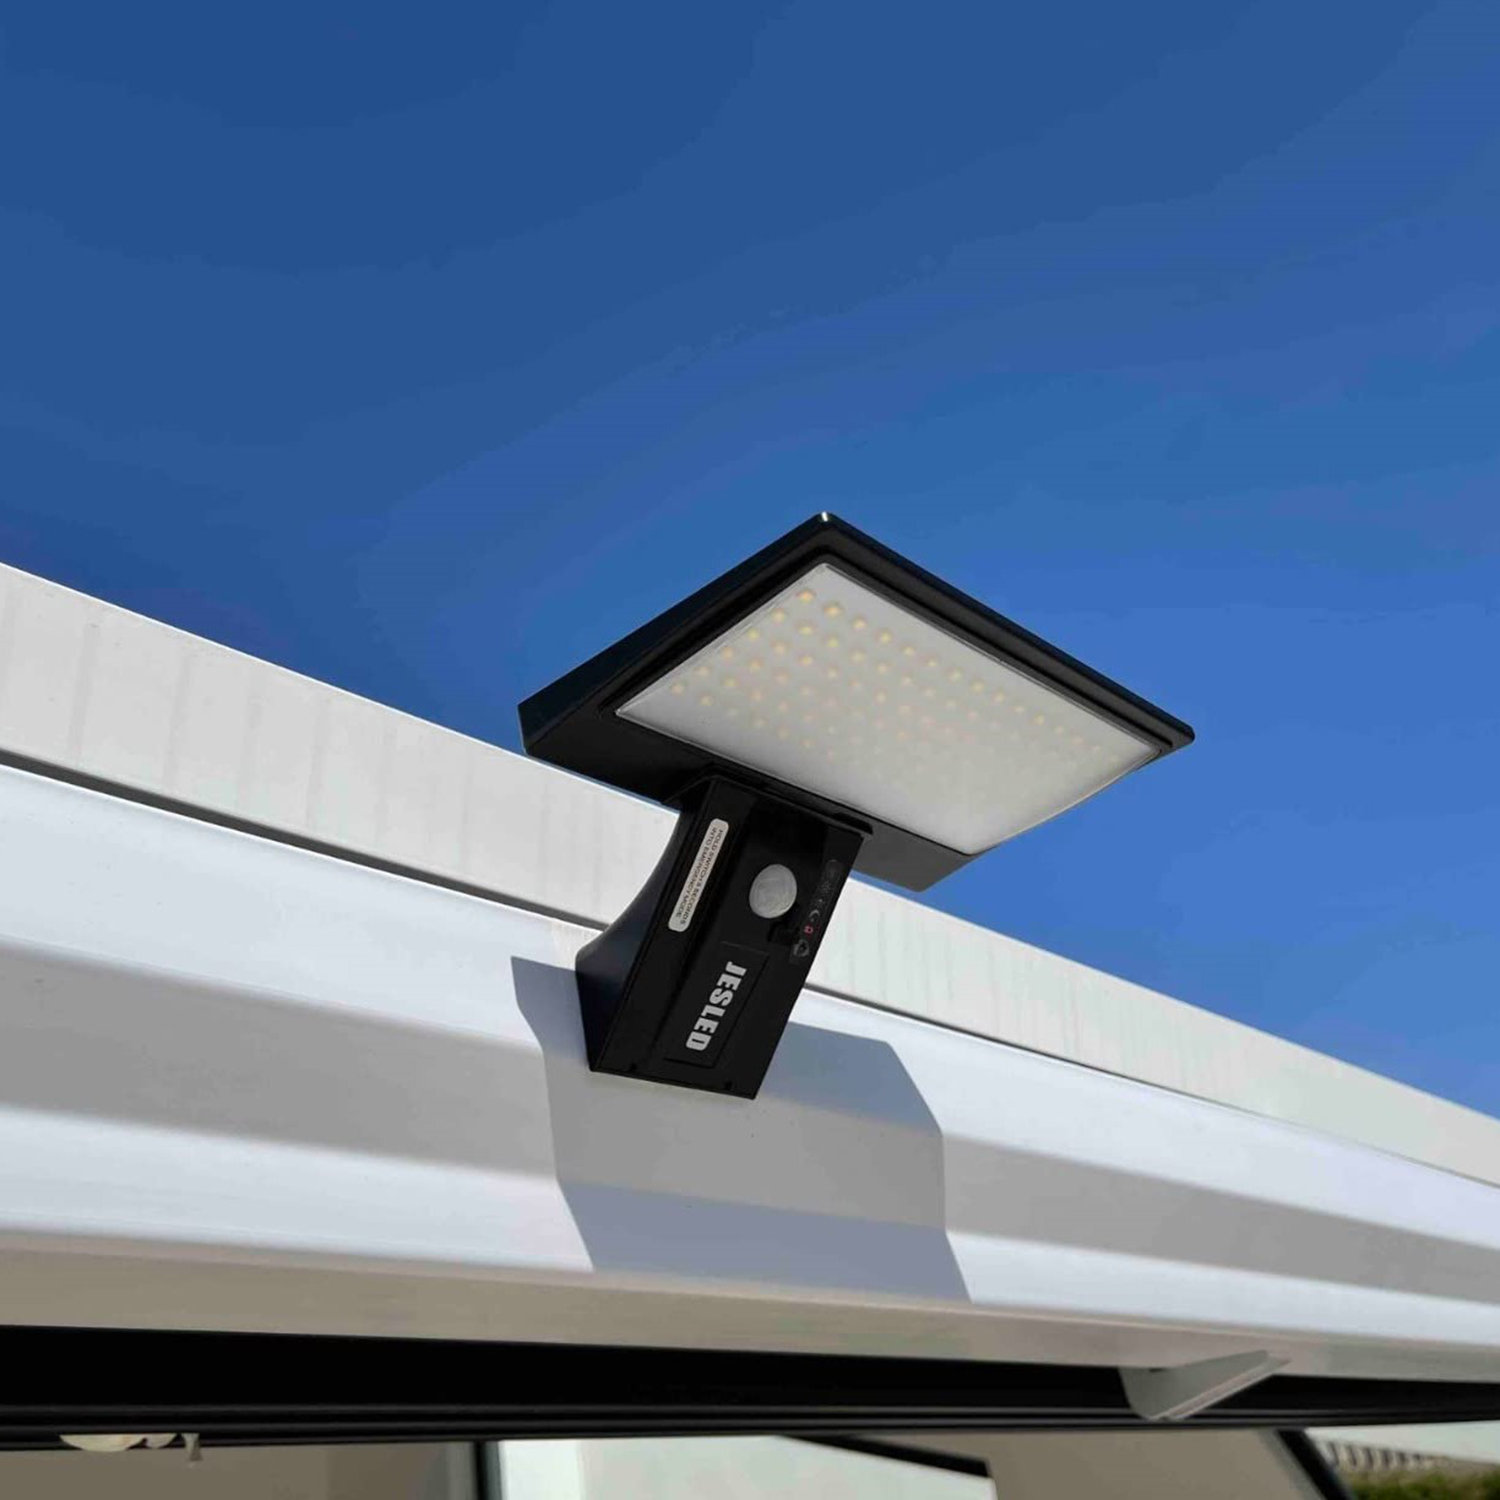 JESLED Black Low Voltage Solar Powered Integrated LED Spot Light & Reviews